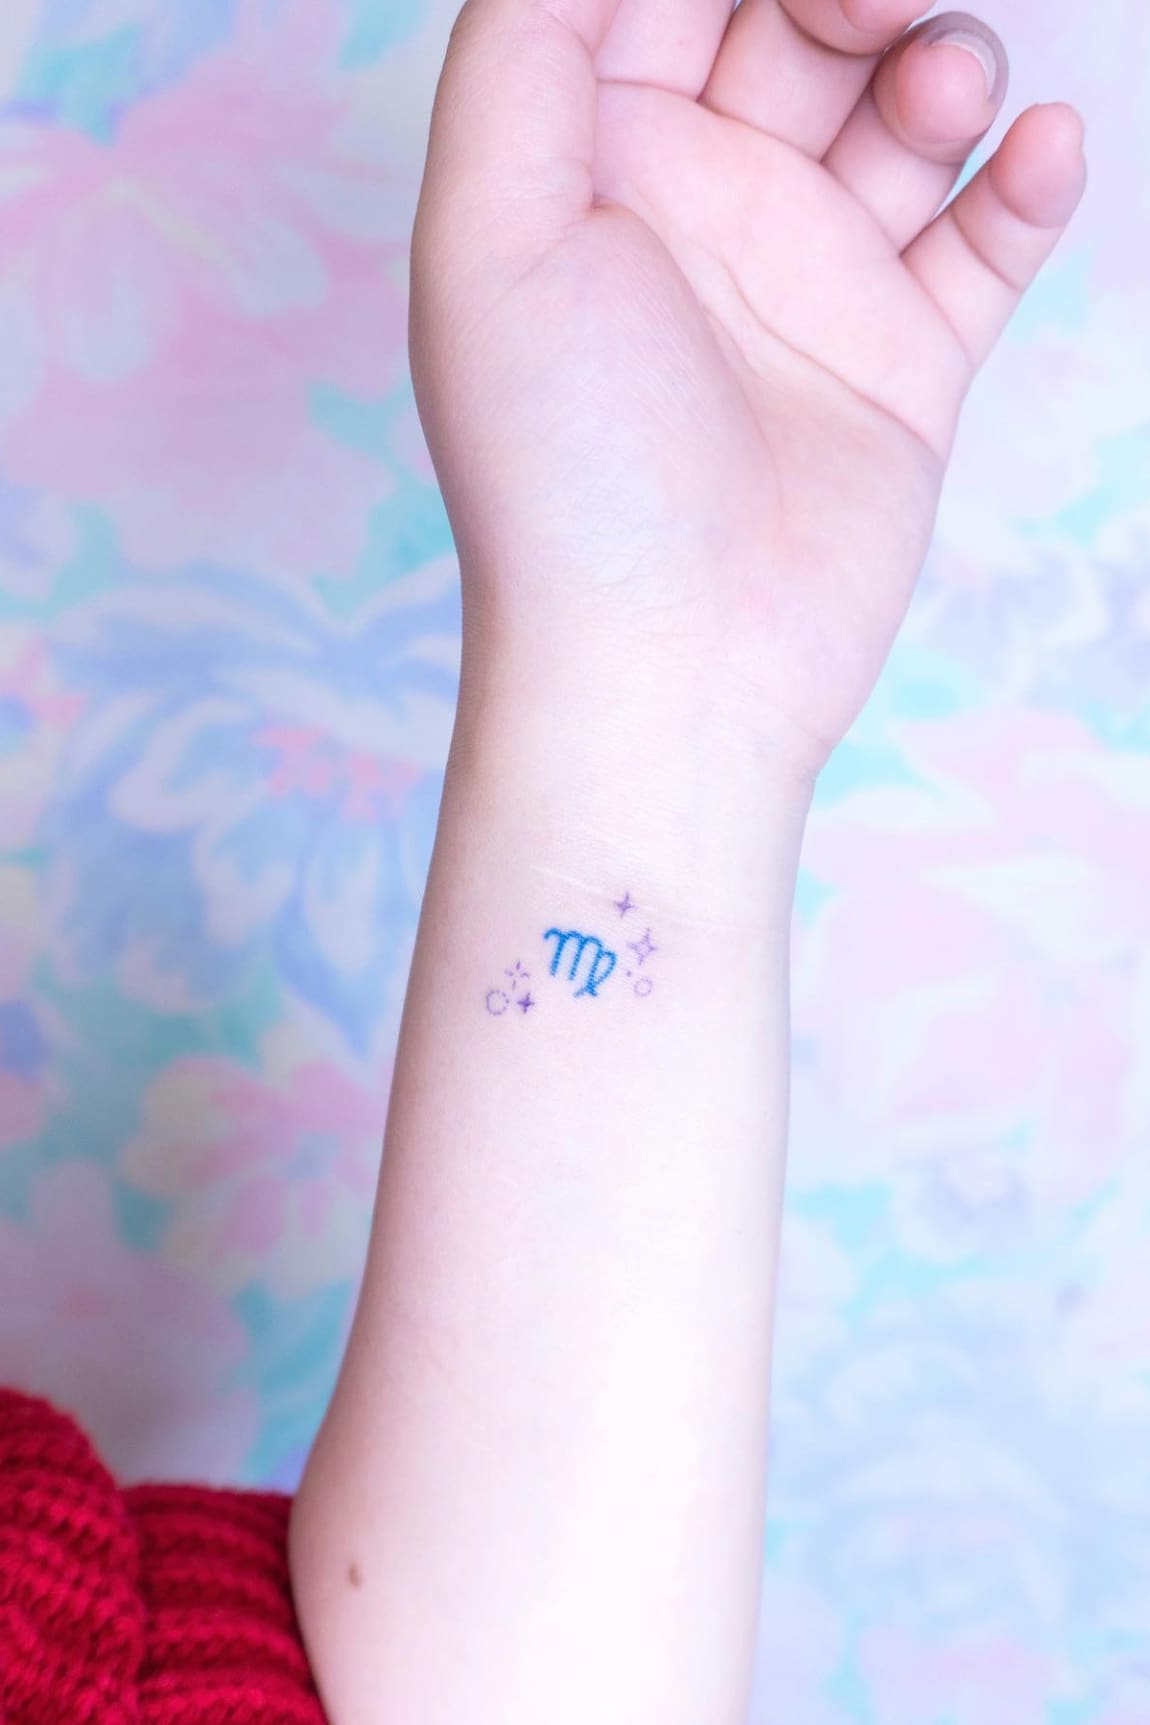 Virgo Tattoo On Wrist